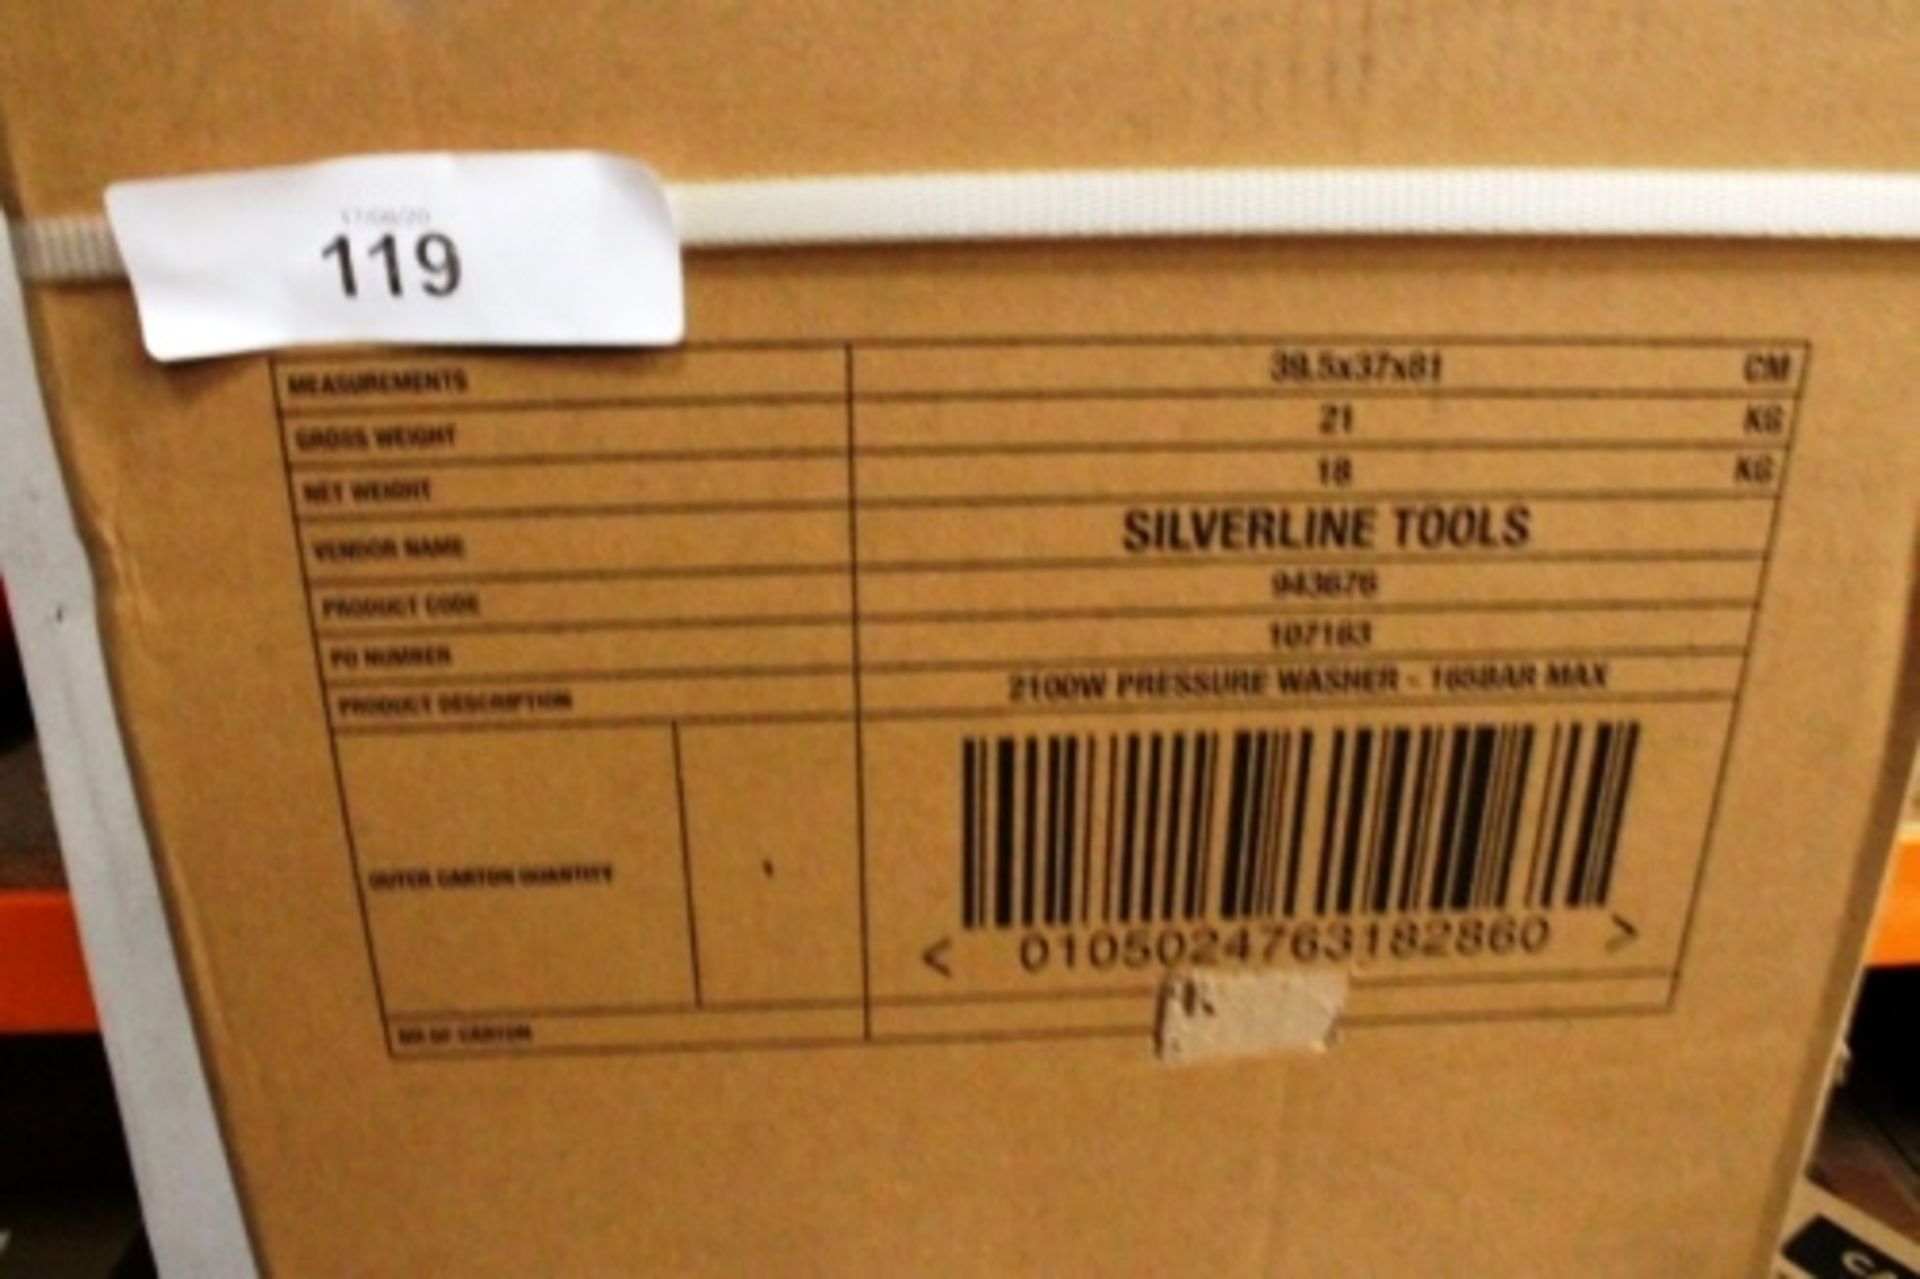 Silverline 2100W pressure washer, product code 943676 - New (ES6)